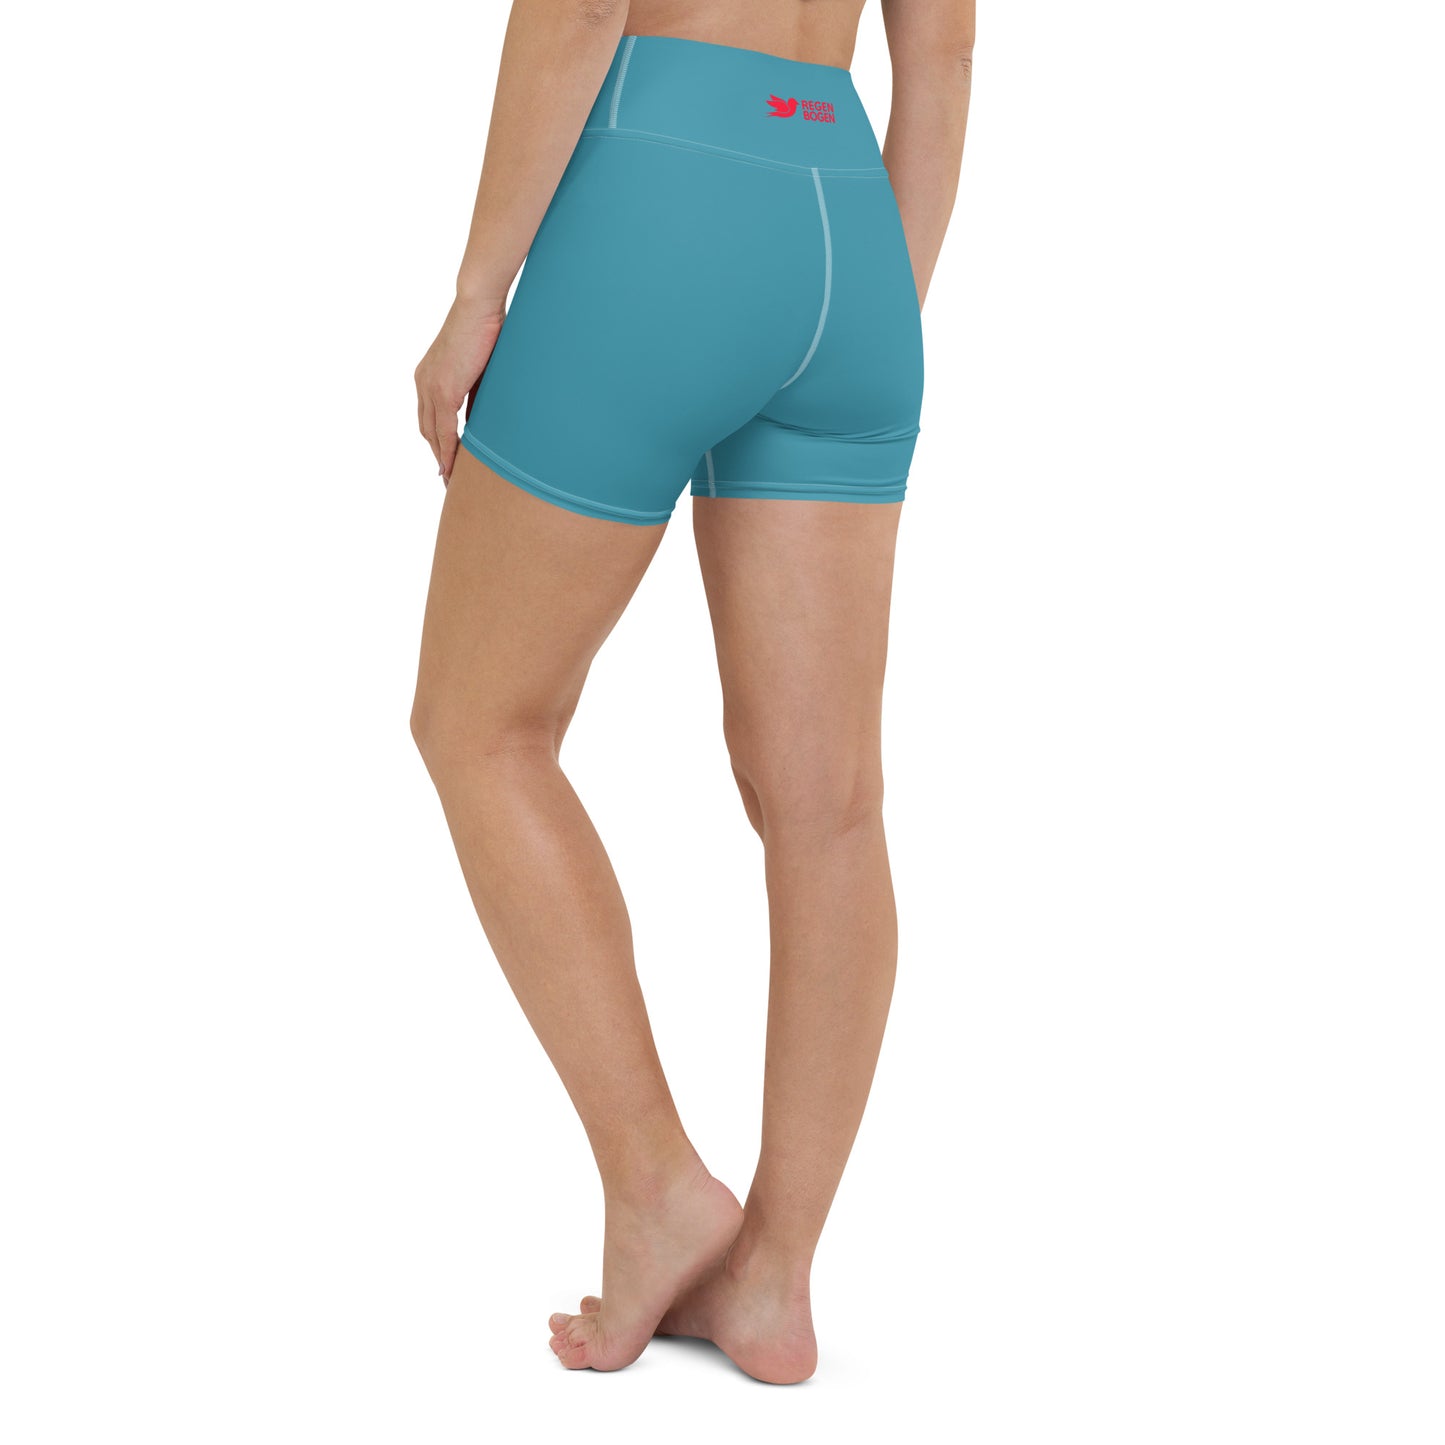 Schnucki Solid Blue High Waist Yoga Shorts / Bike Shorts with Inside Pocket